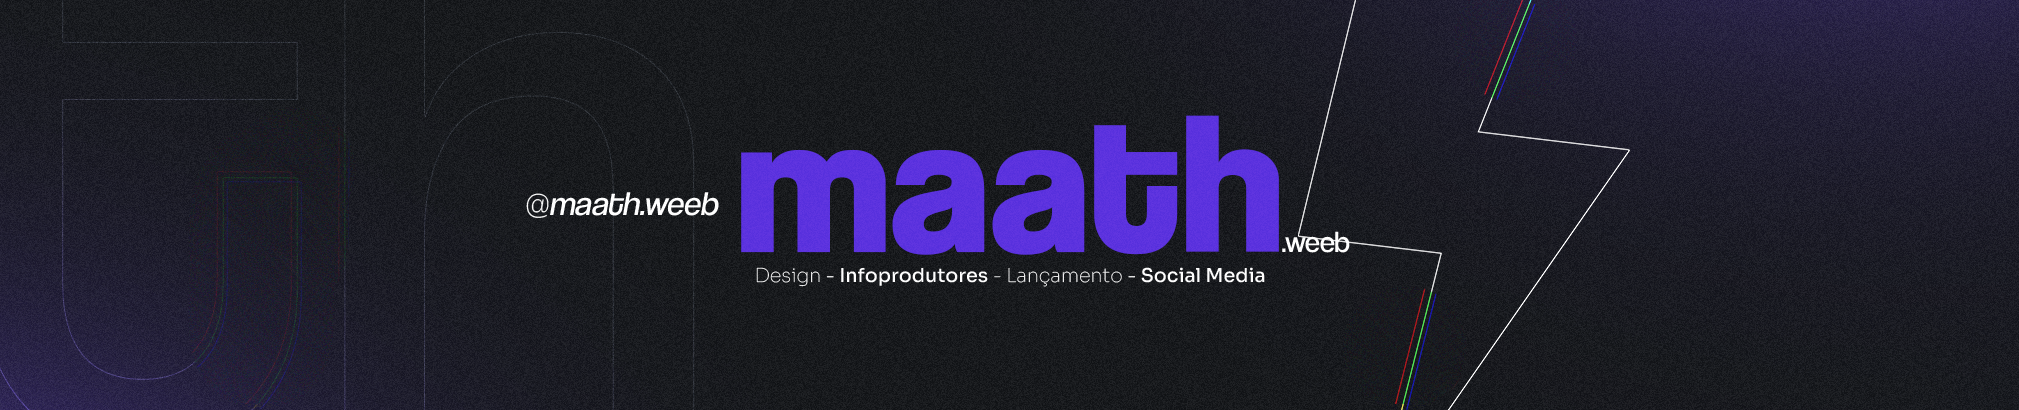 Matheus Lourenço's profile banner